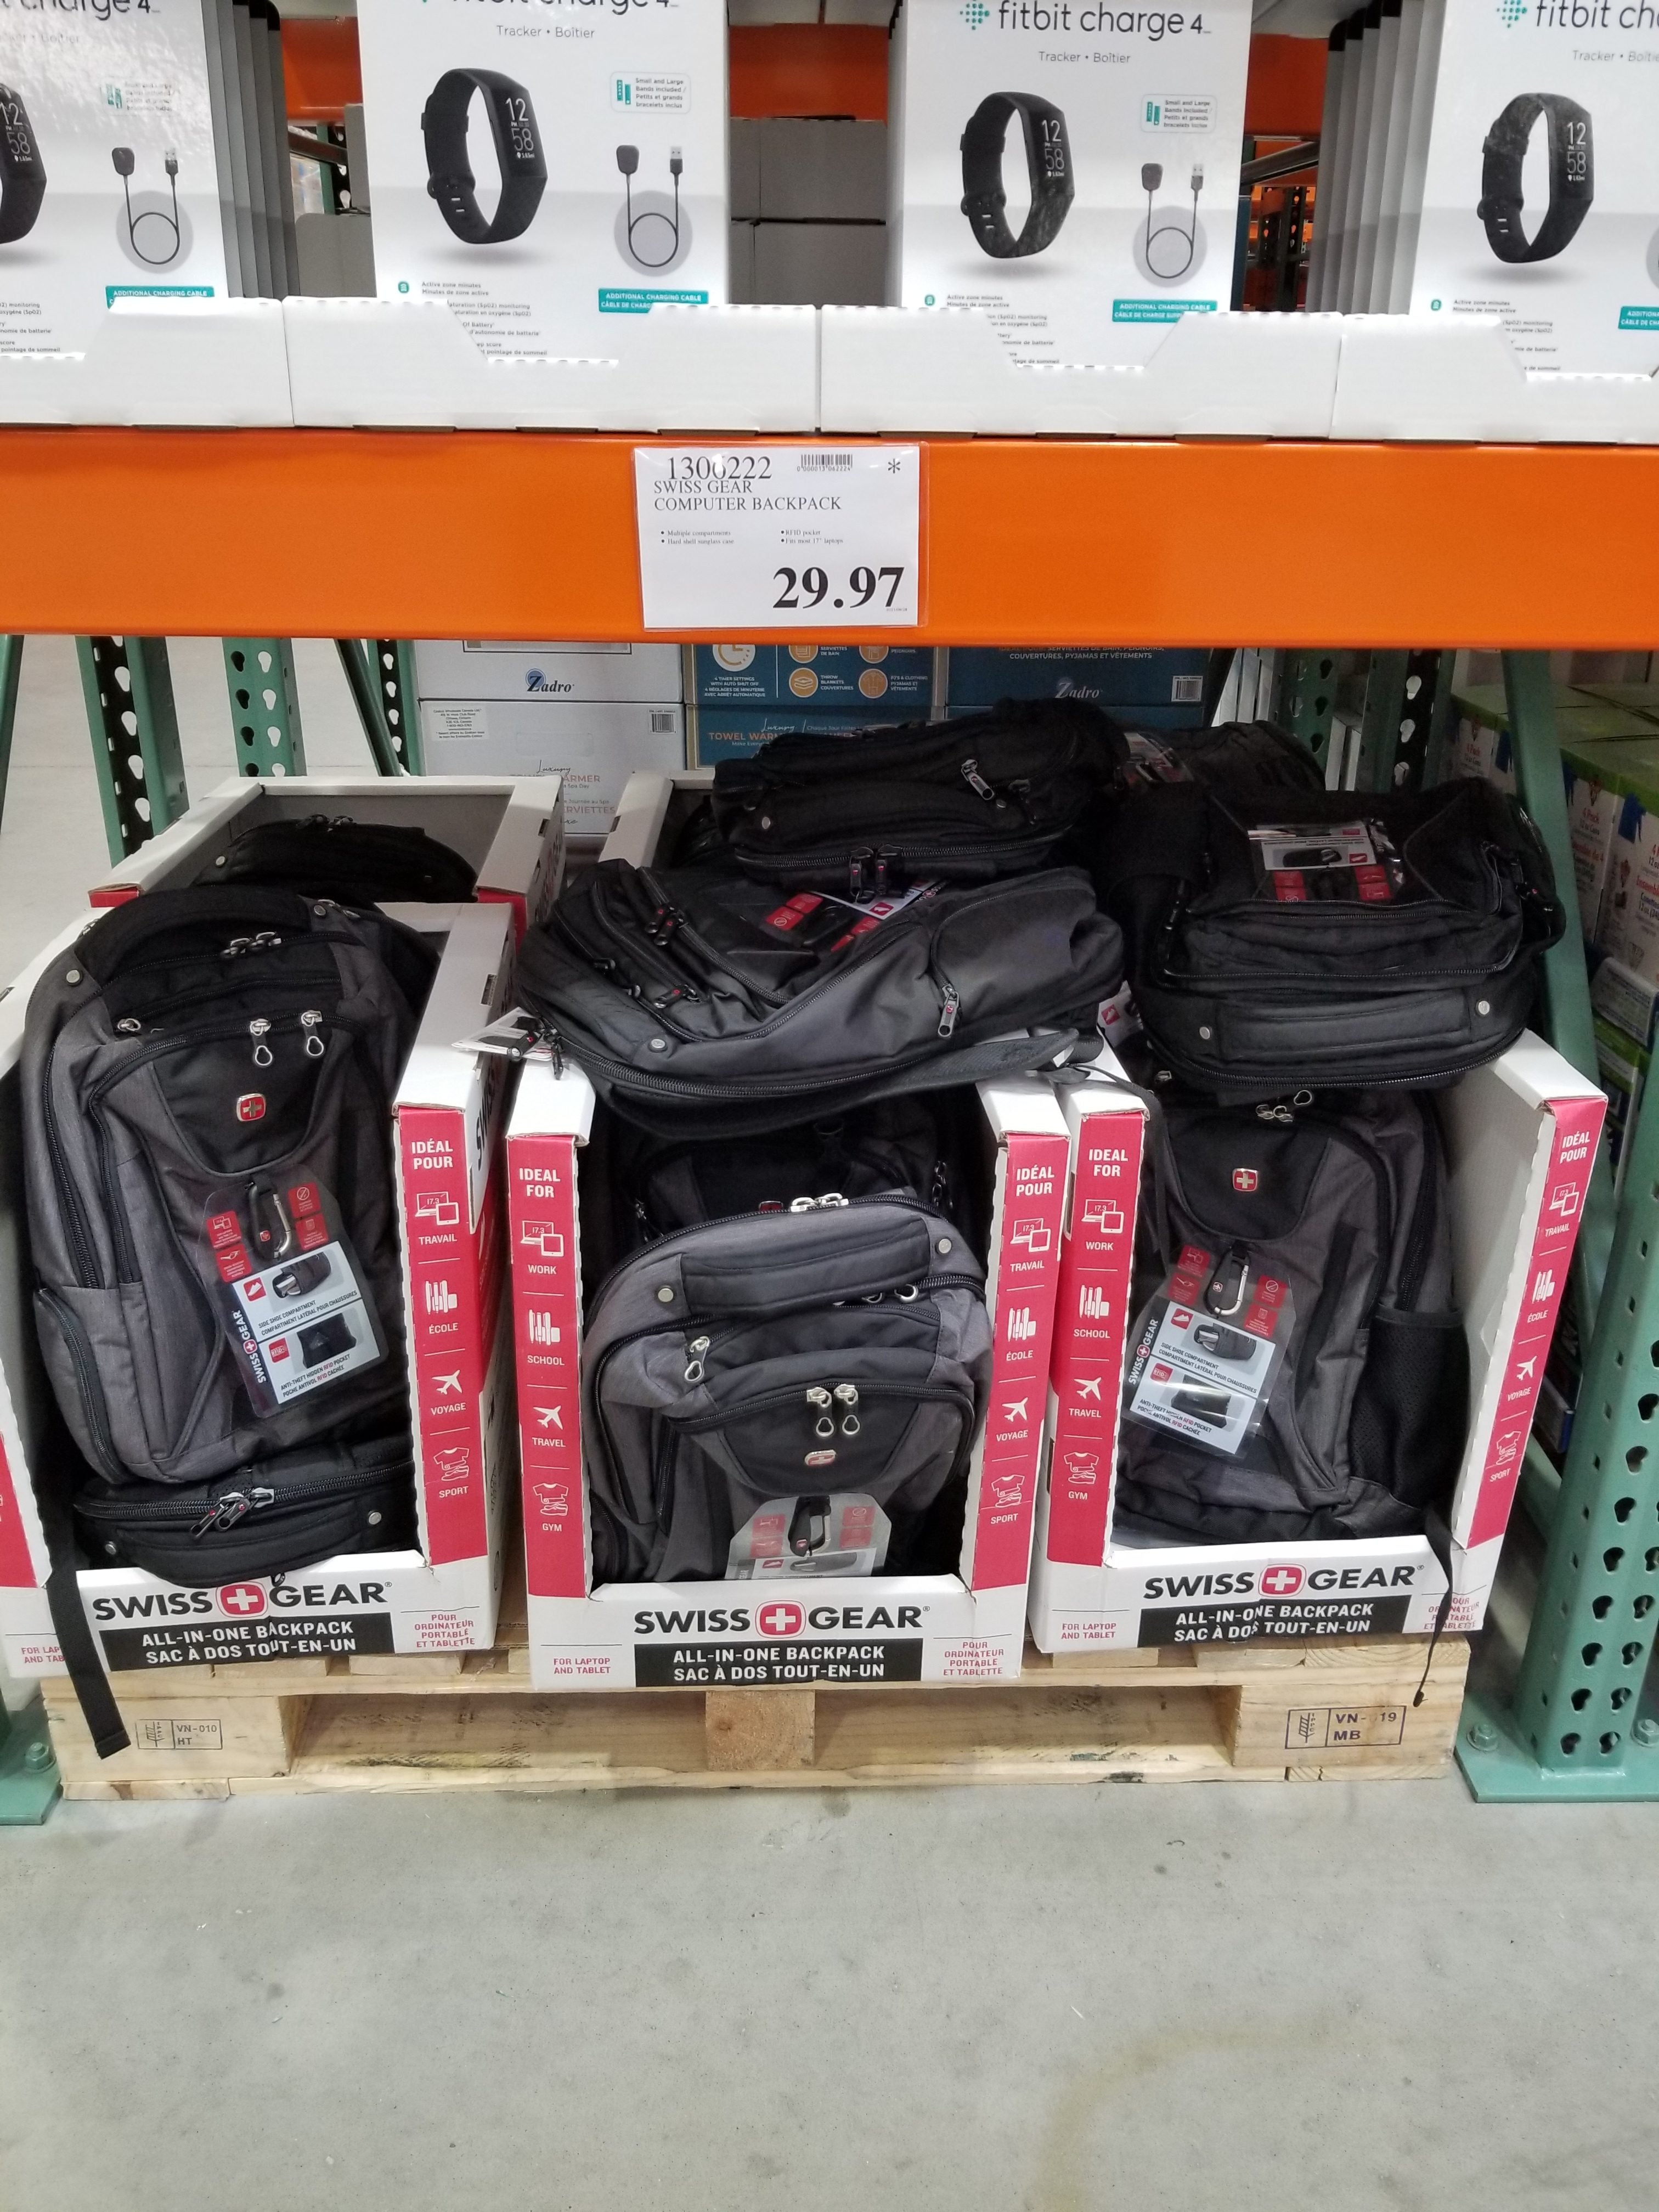 Costco] Swissgear backpacks $29.97 - RedFlagDeals.com Forums